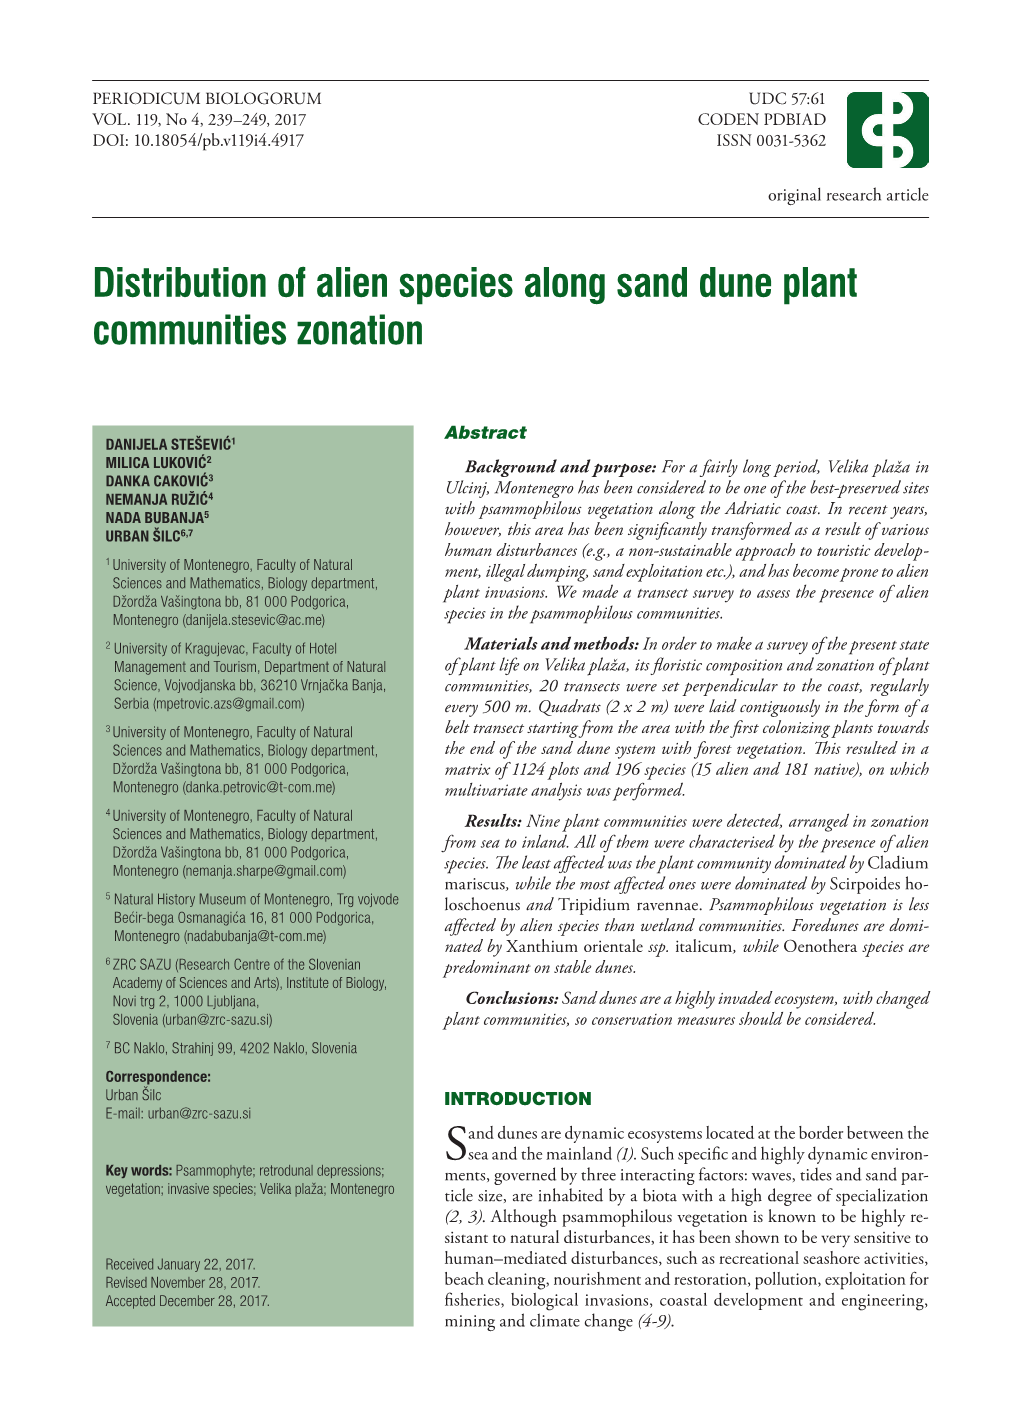 Distribution of Alien Species Along Sand Dune Plant Communities Zonation